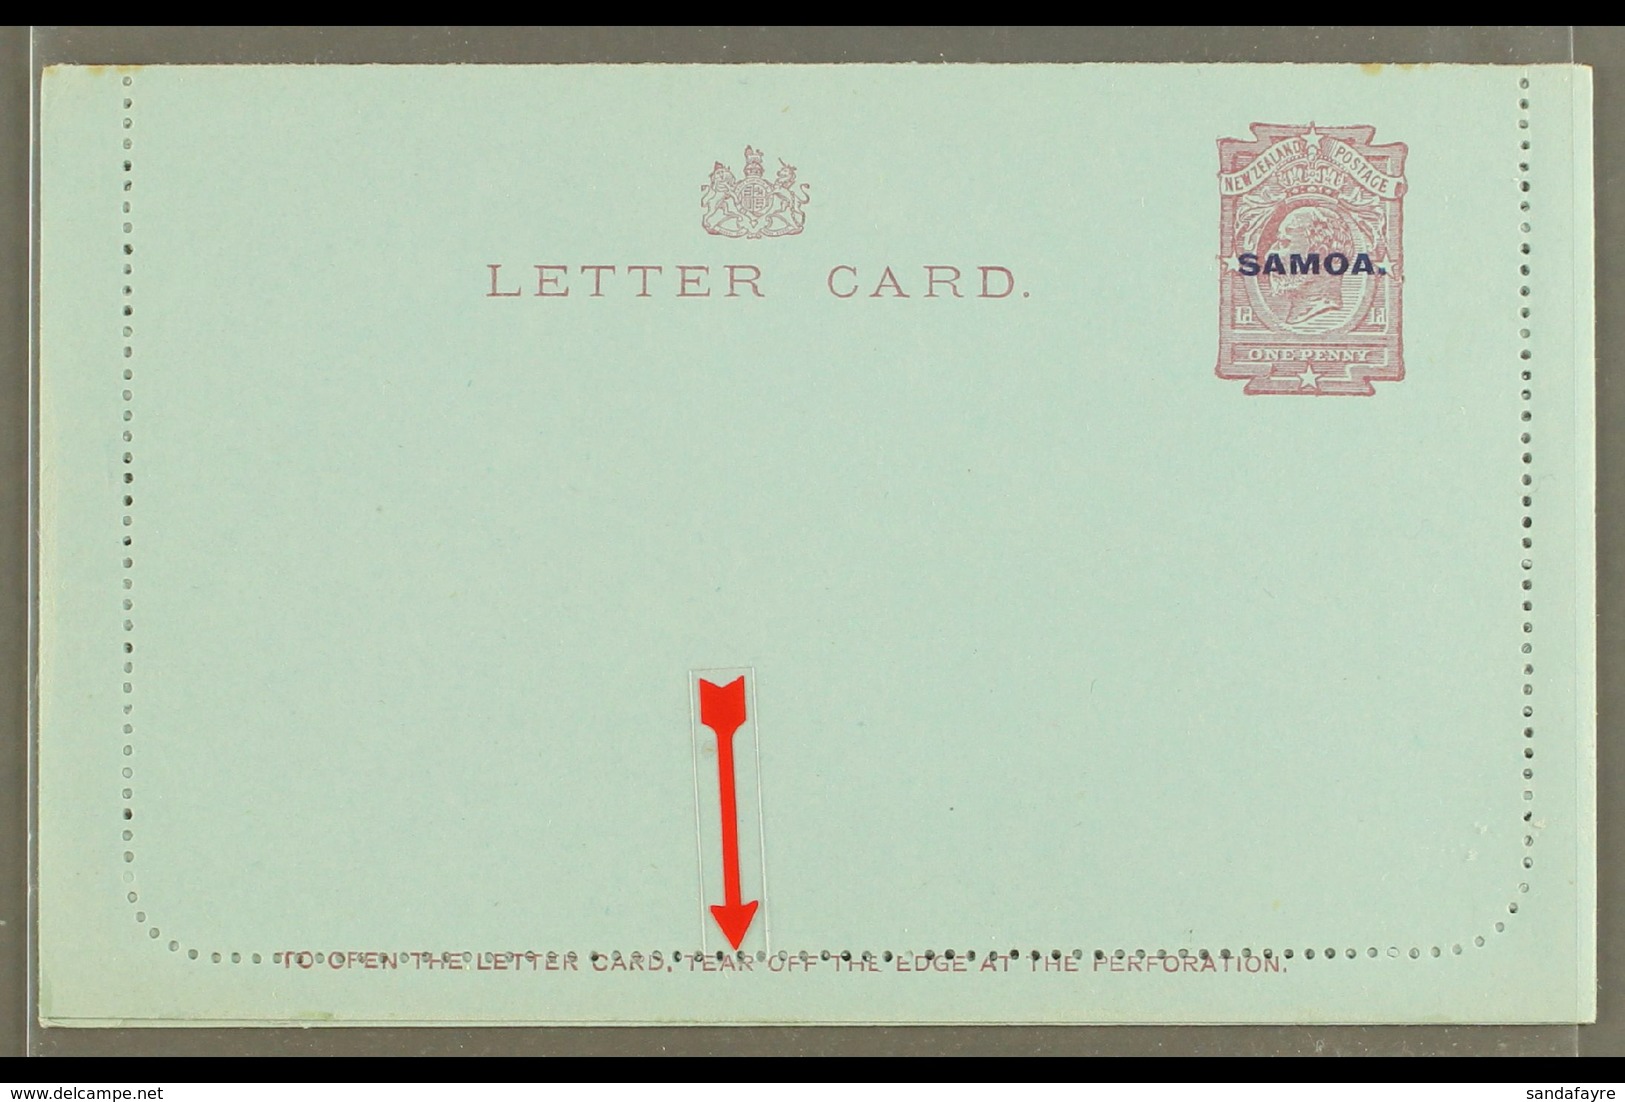 1914 LETTER CARD 1d Dull Claret On Blue, Inscription 94mm, H&G 1a, Unused, Broken Second "T" In "LETTER CARD," Clean & F - Samoa